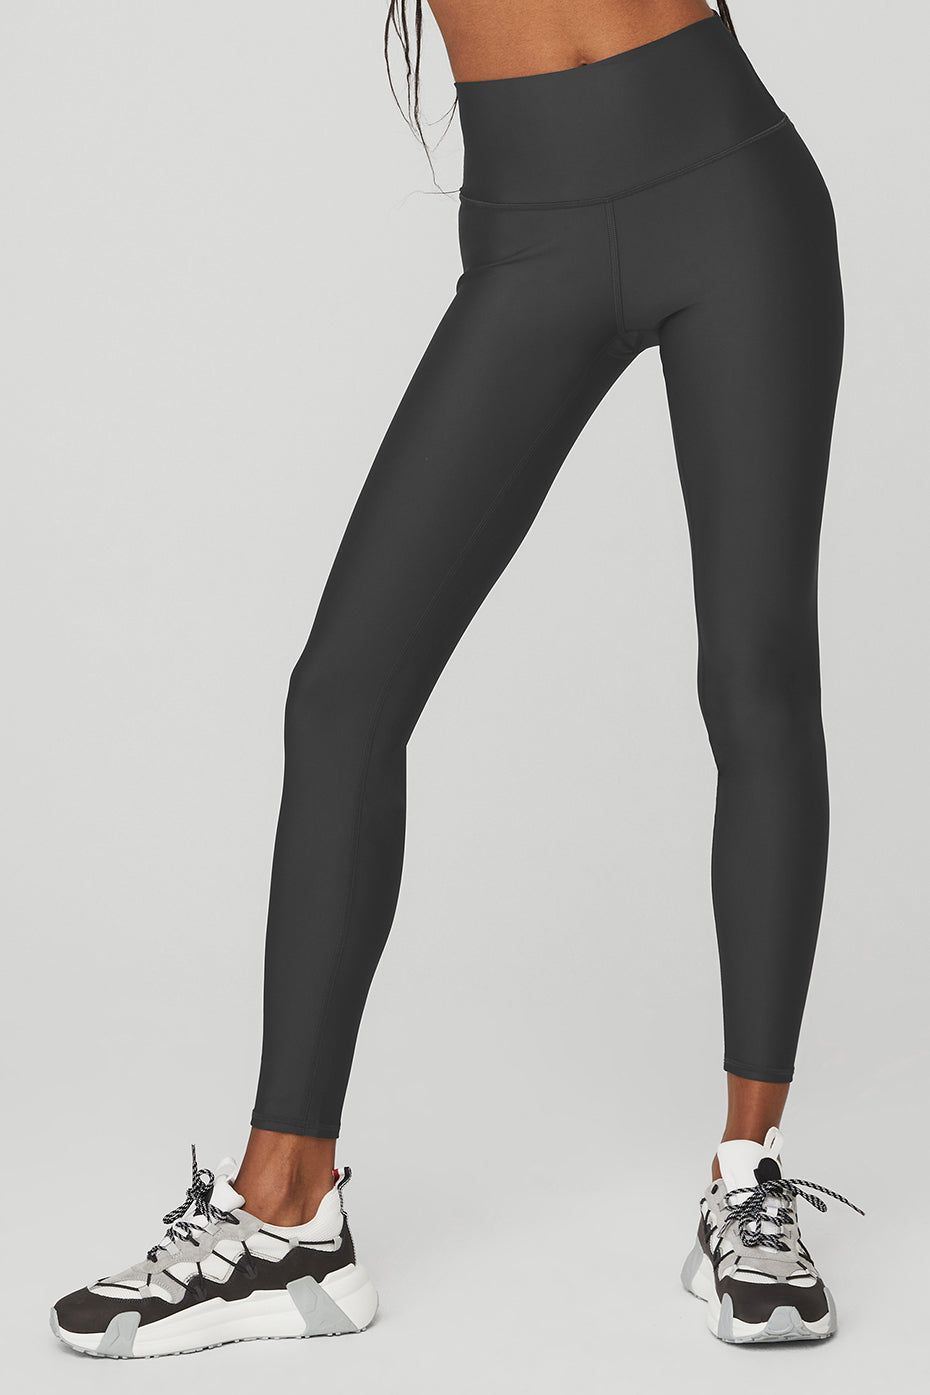 Top quality womens leggings, NZ made, Black, High Waisted